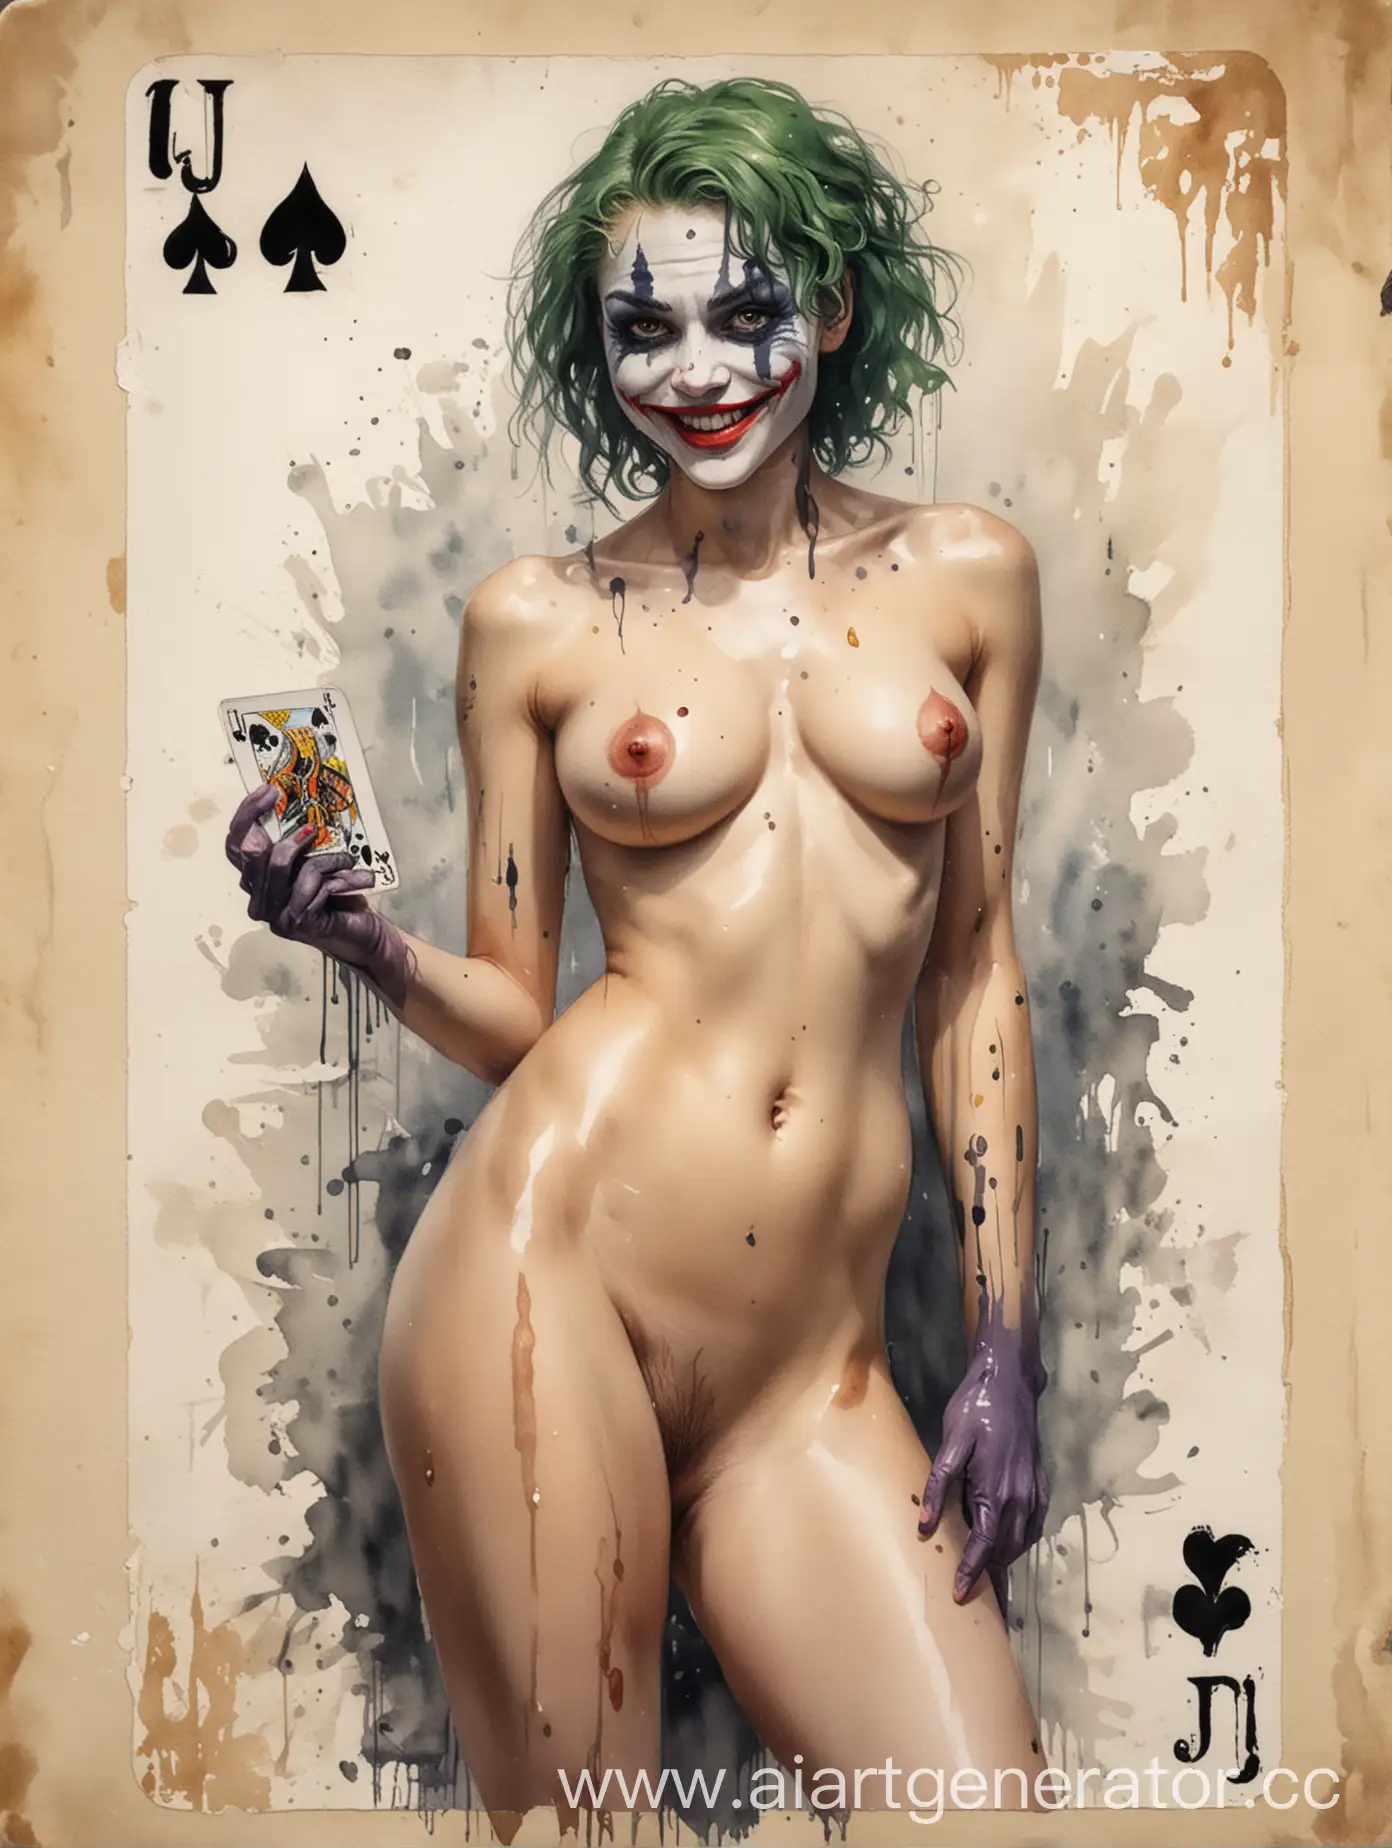 Watercolor-Erotic-Playing-Card-Joker-Featuring-a-Nude-Woman-in-Joker-Body-Art-Pose